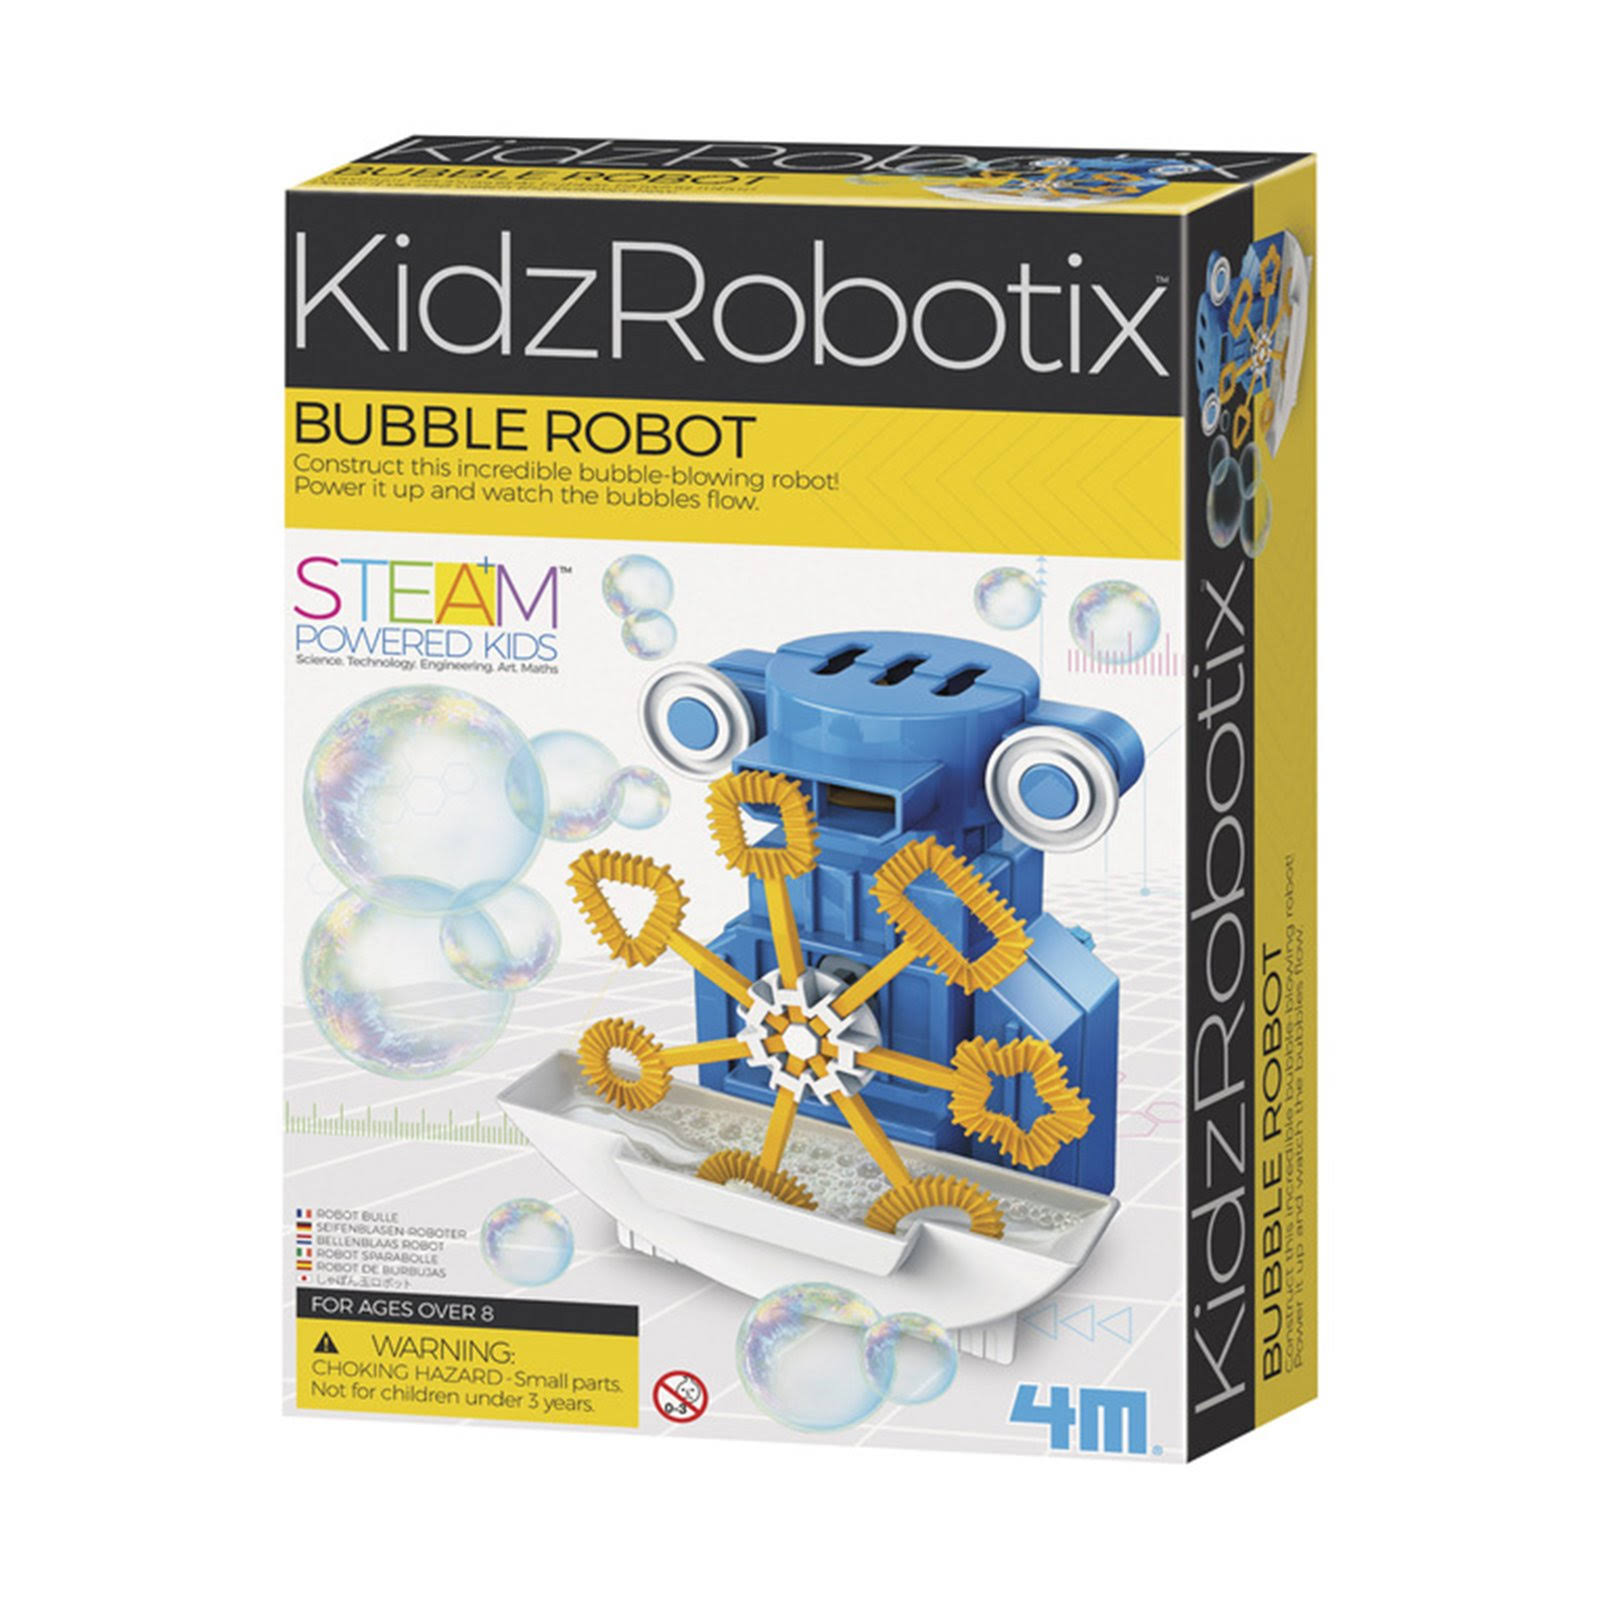 4m Bubble Robot KidzRobotics Steam Powered Kids Science Kit